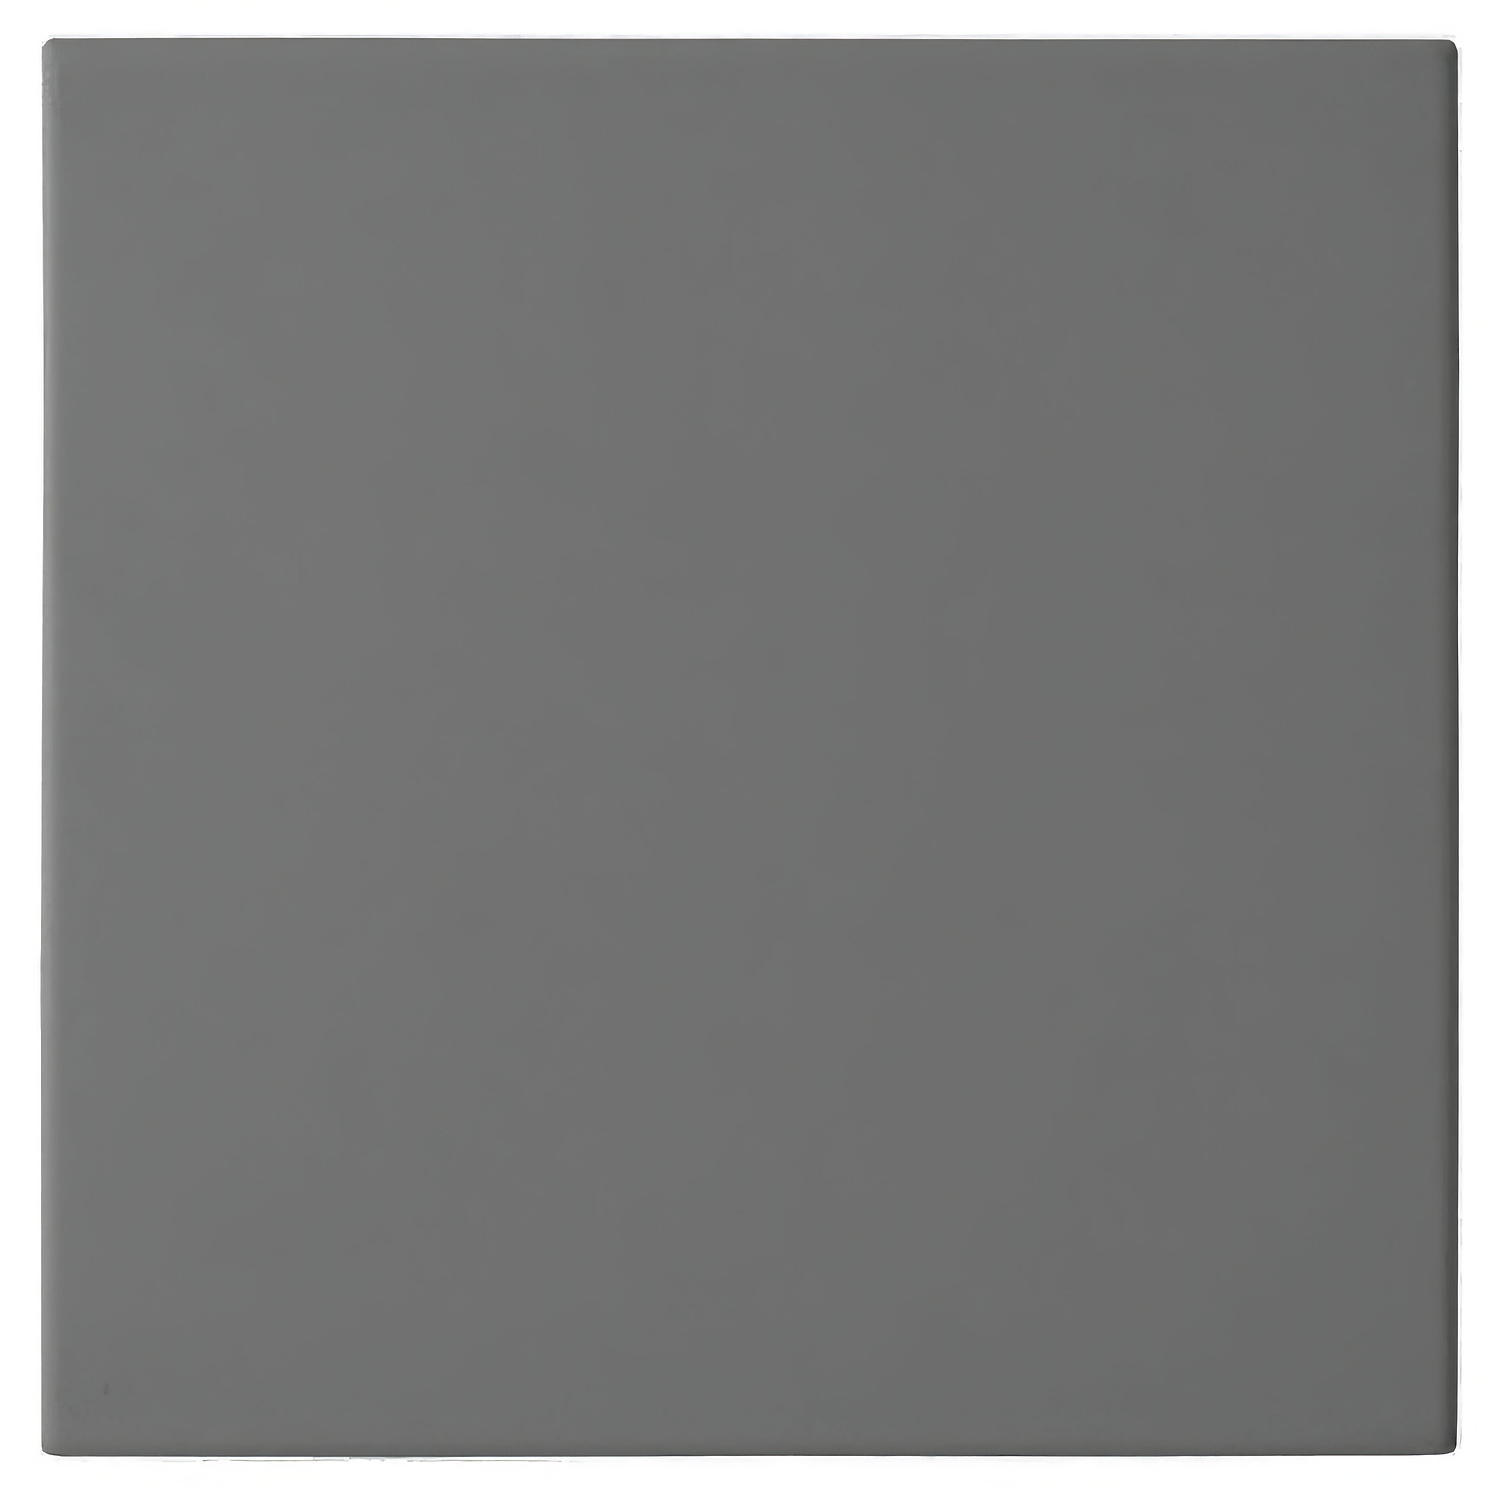 Co-ordinating Plain Tile Grey